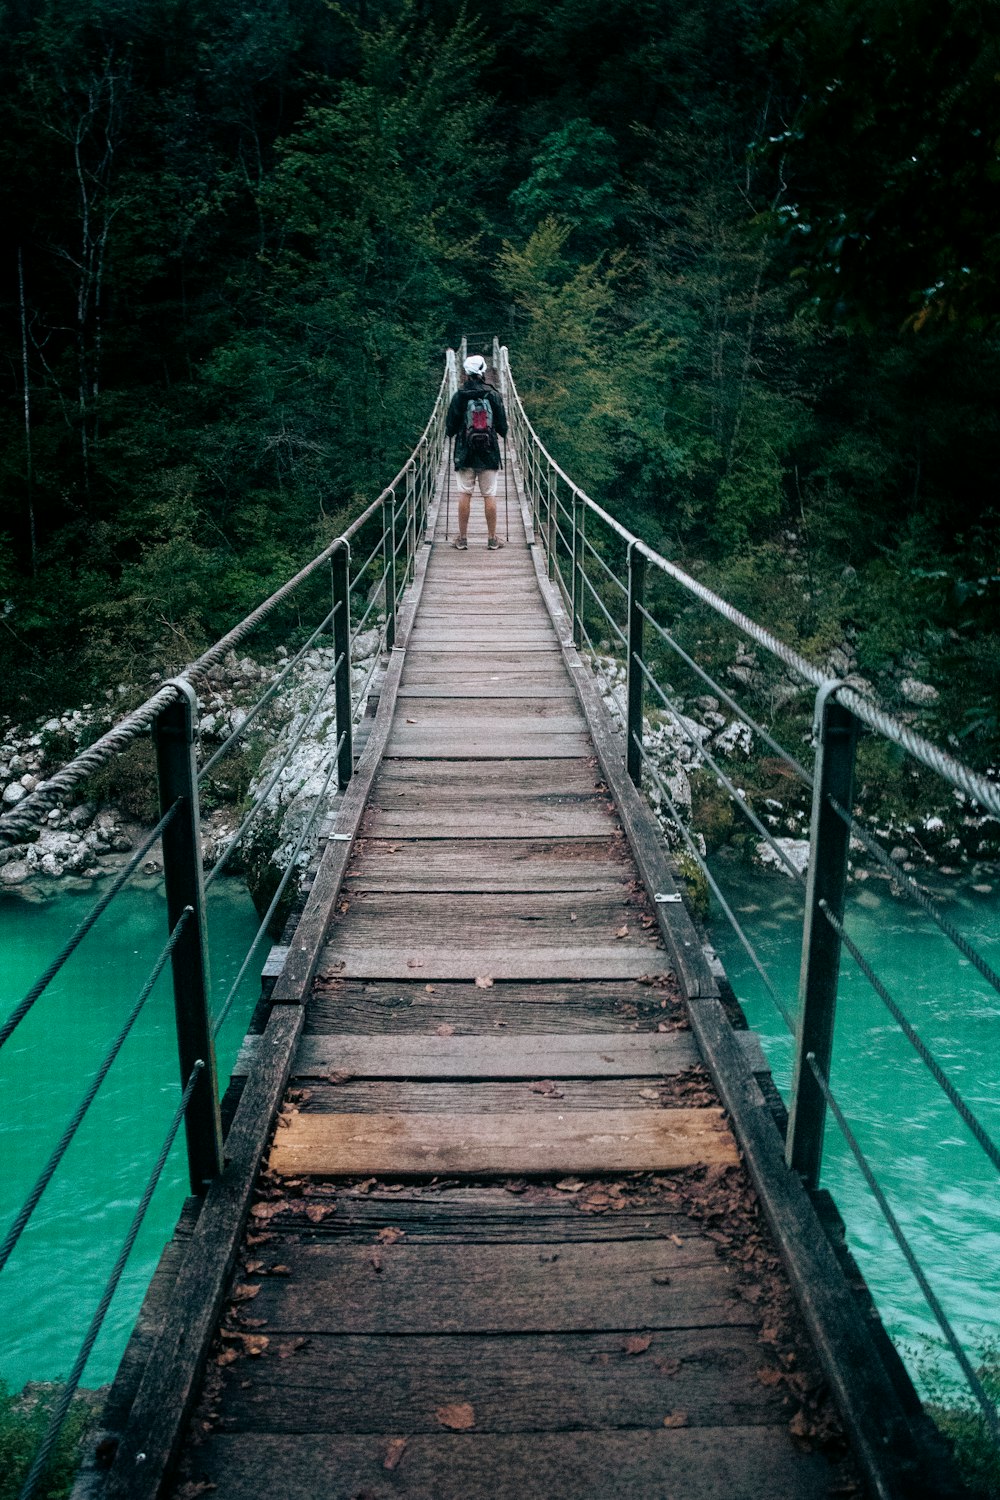 a person walking across a bridge over a river